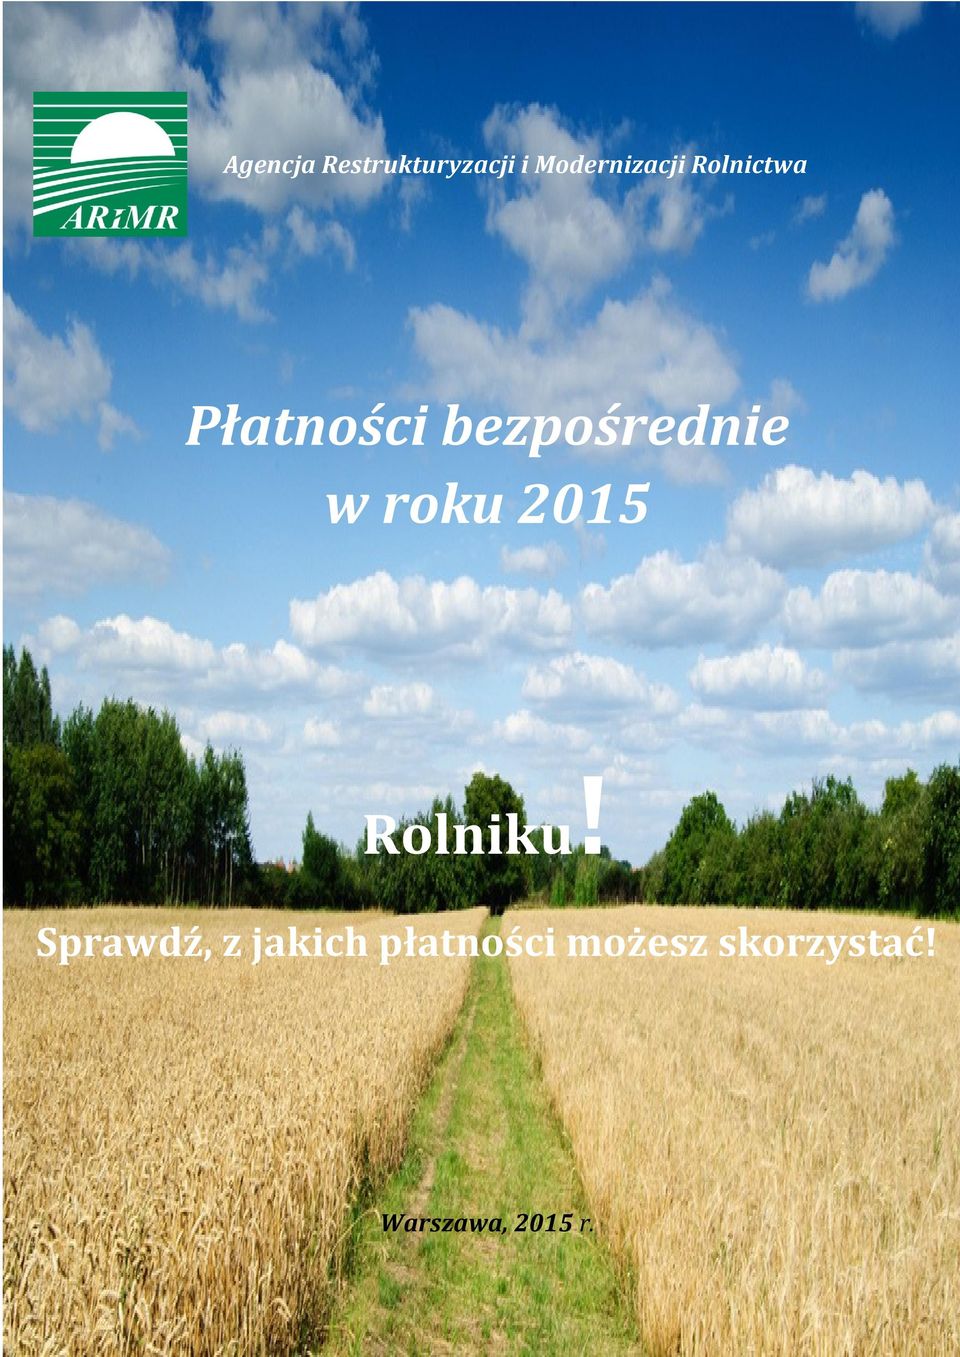 2015 Rolniku!